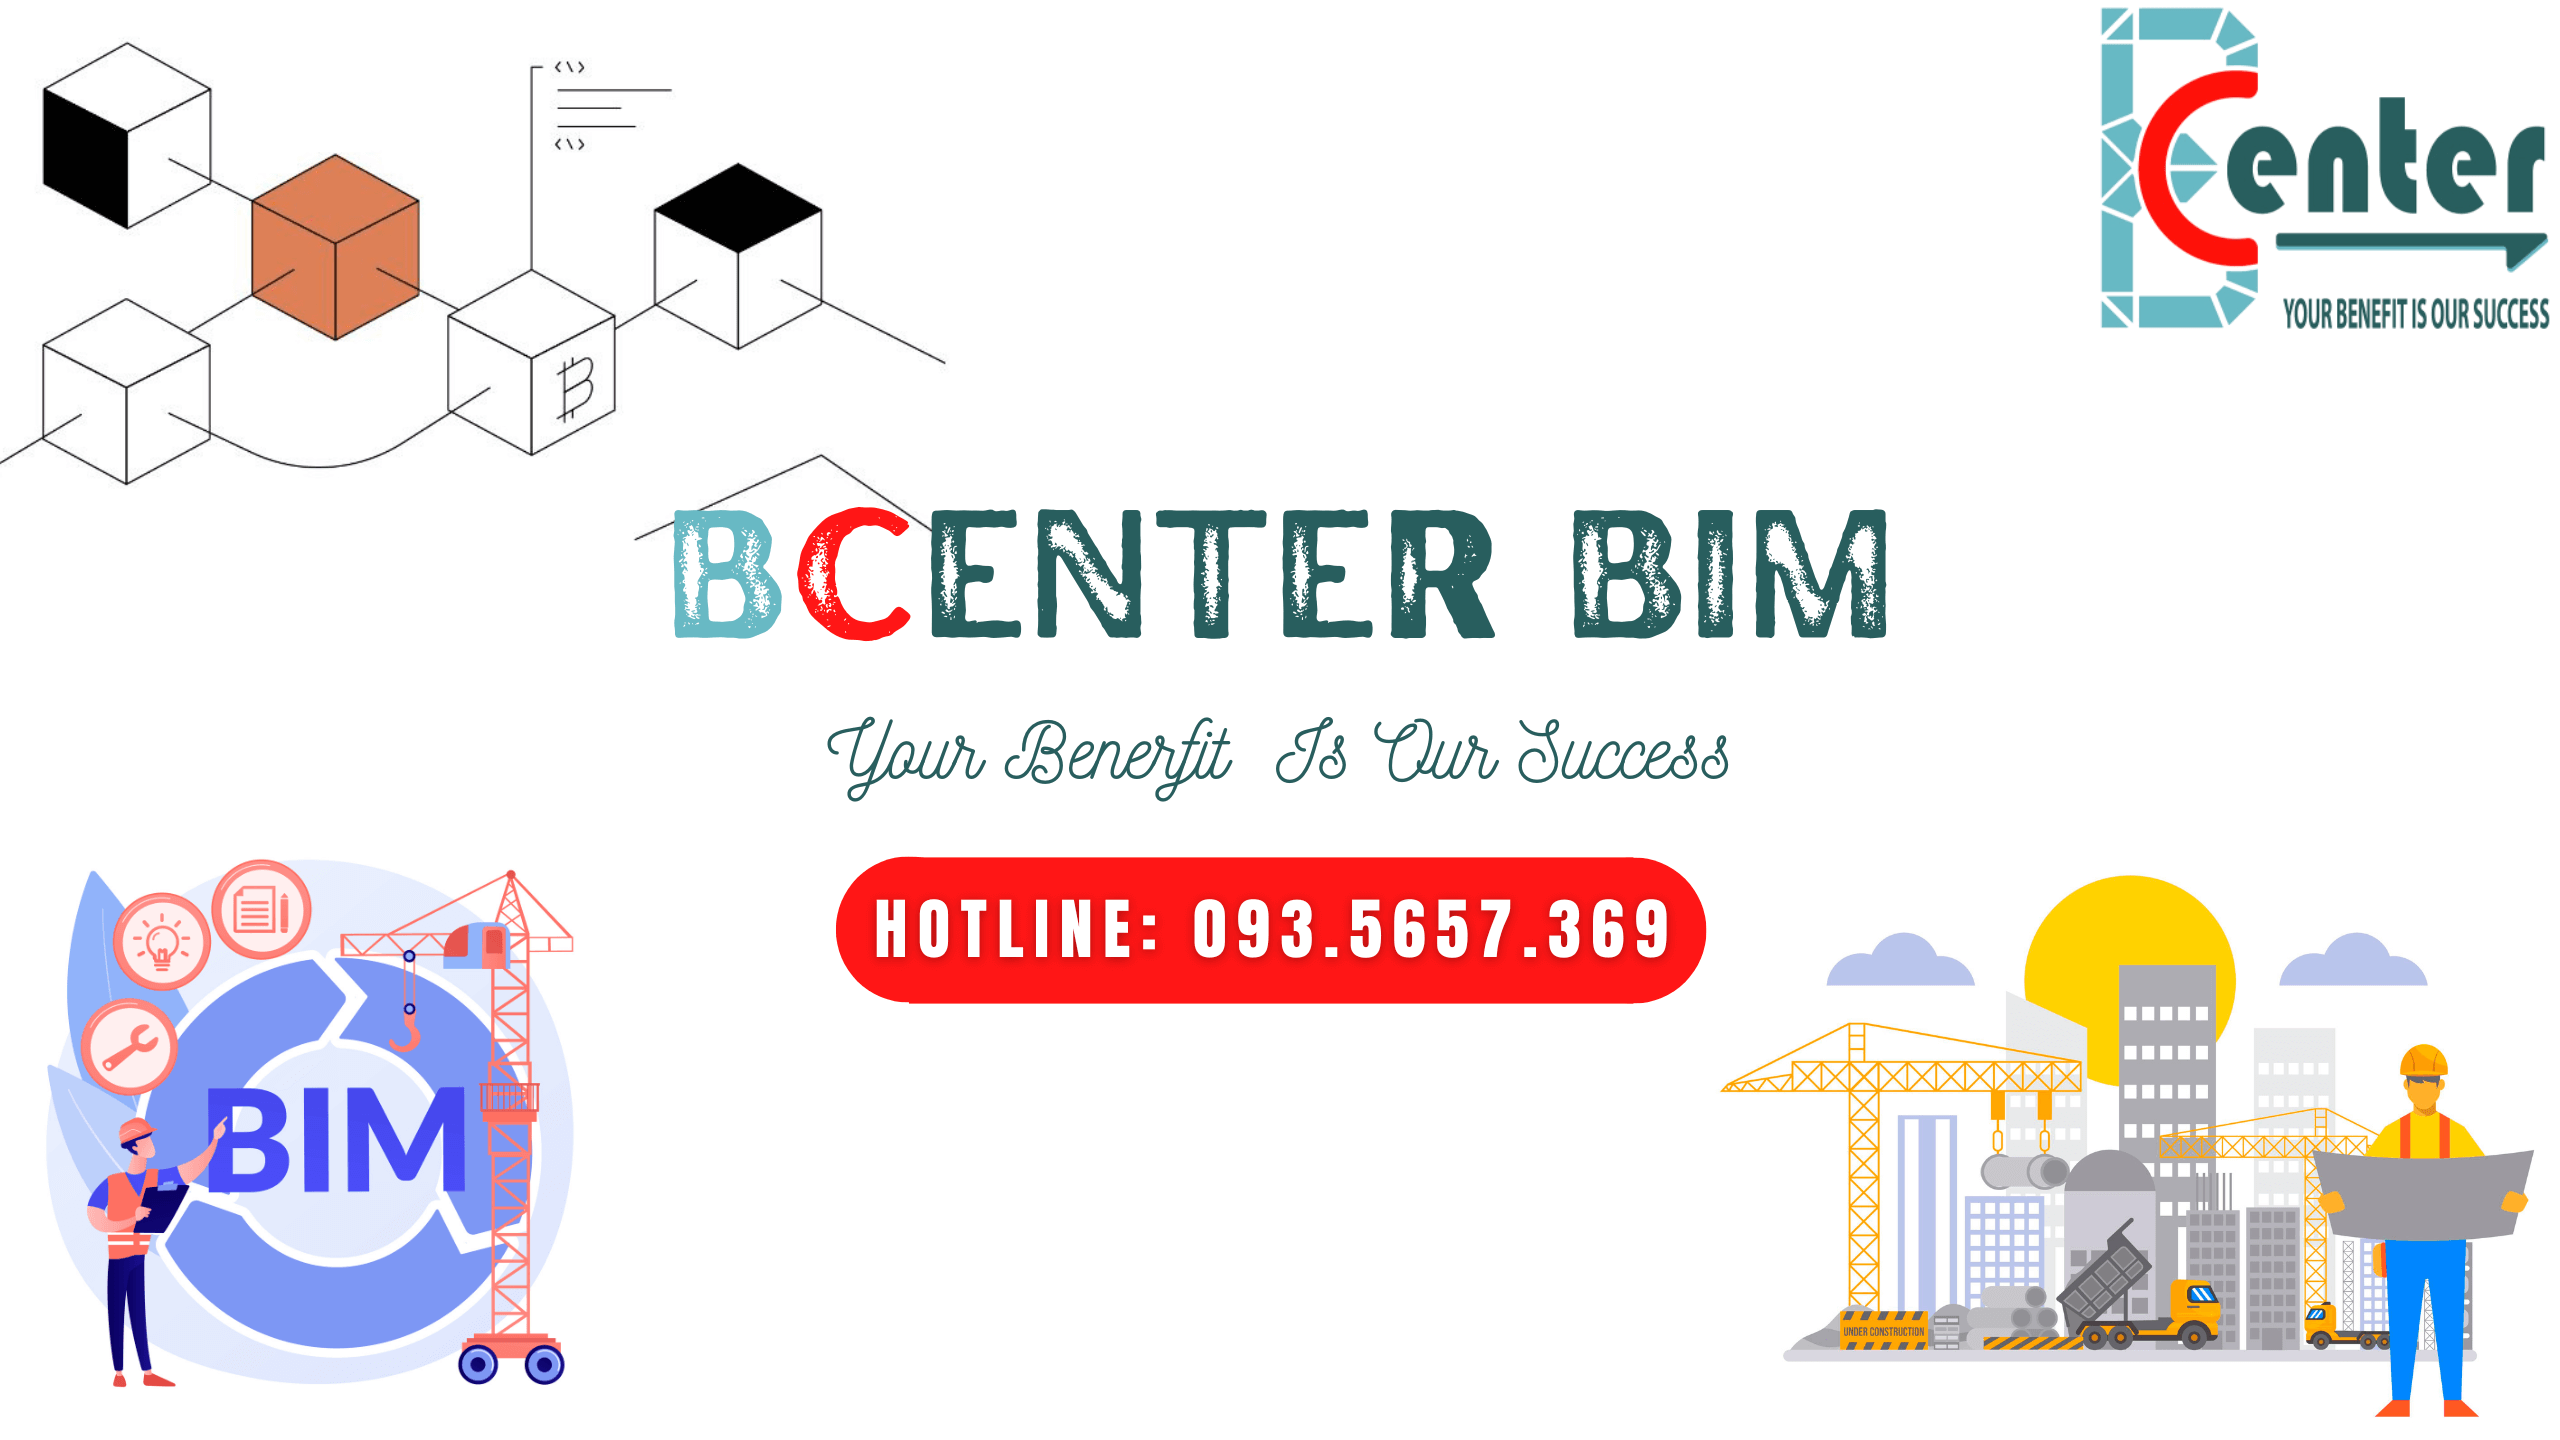 Dịch vụ BCenter